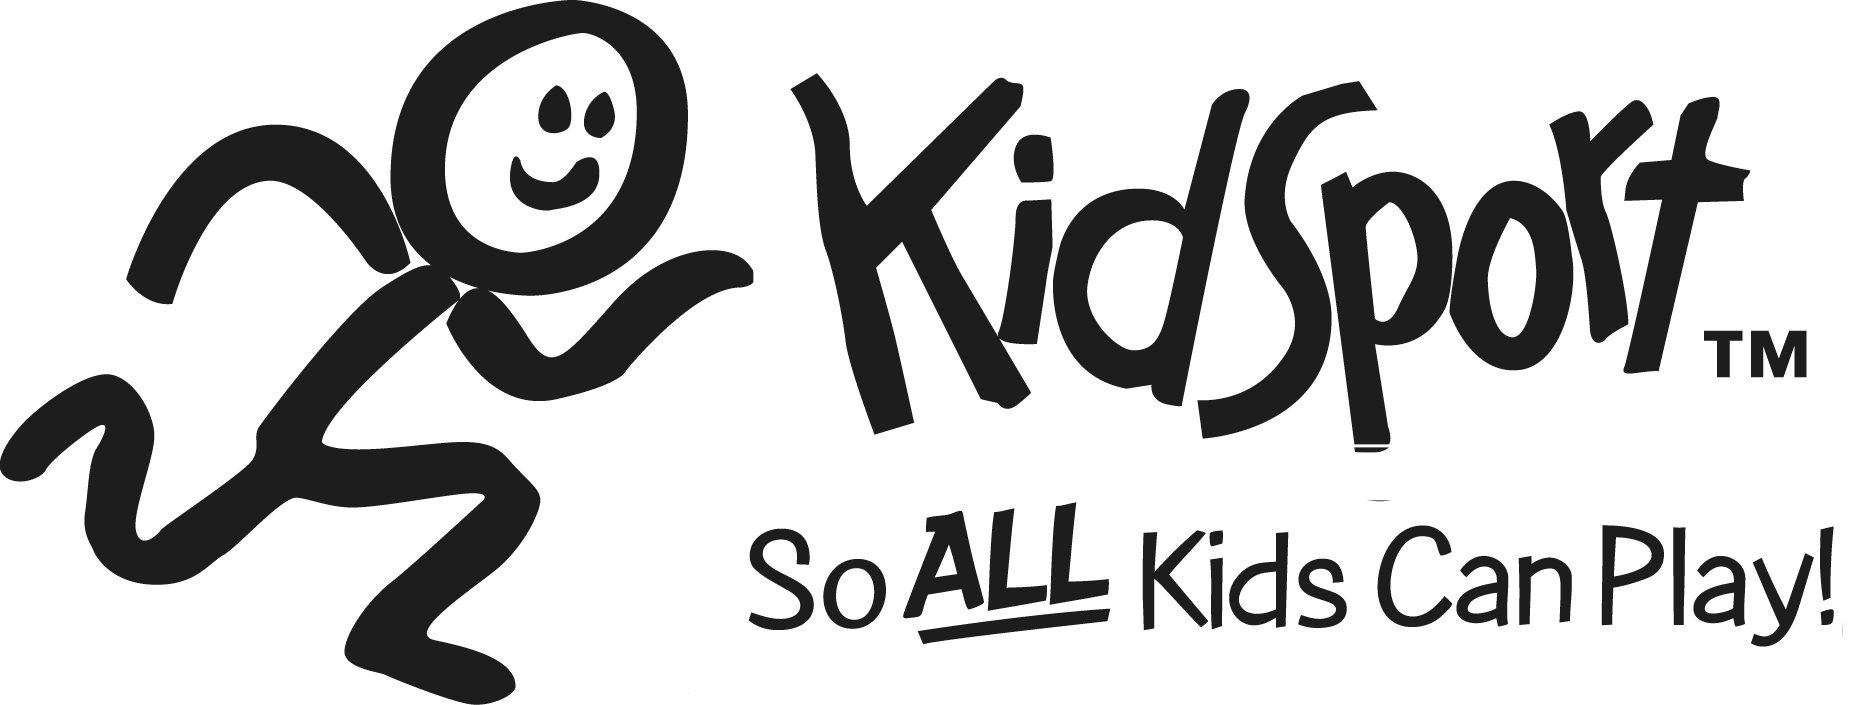 kidsport_logo